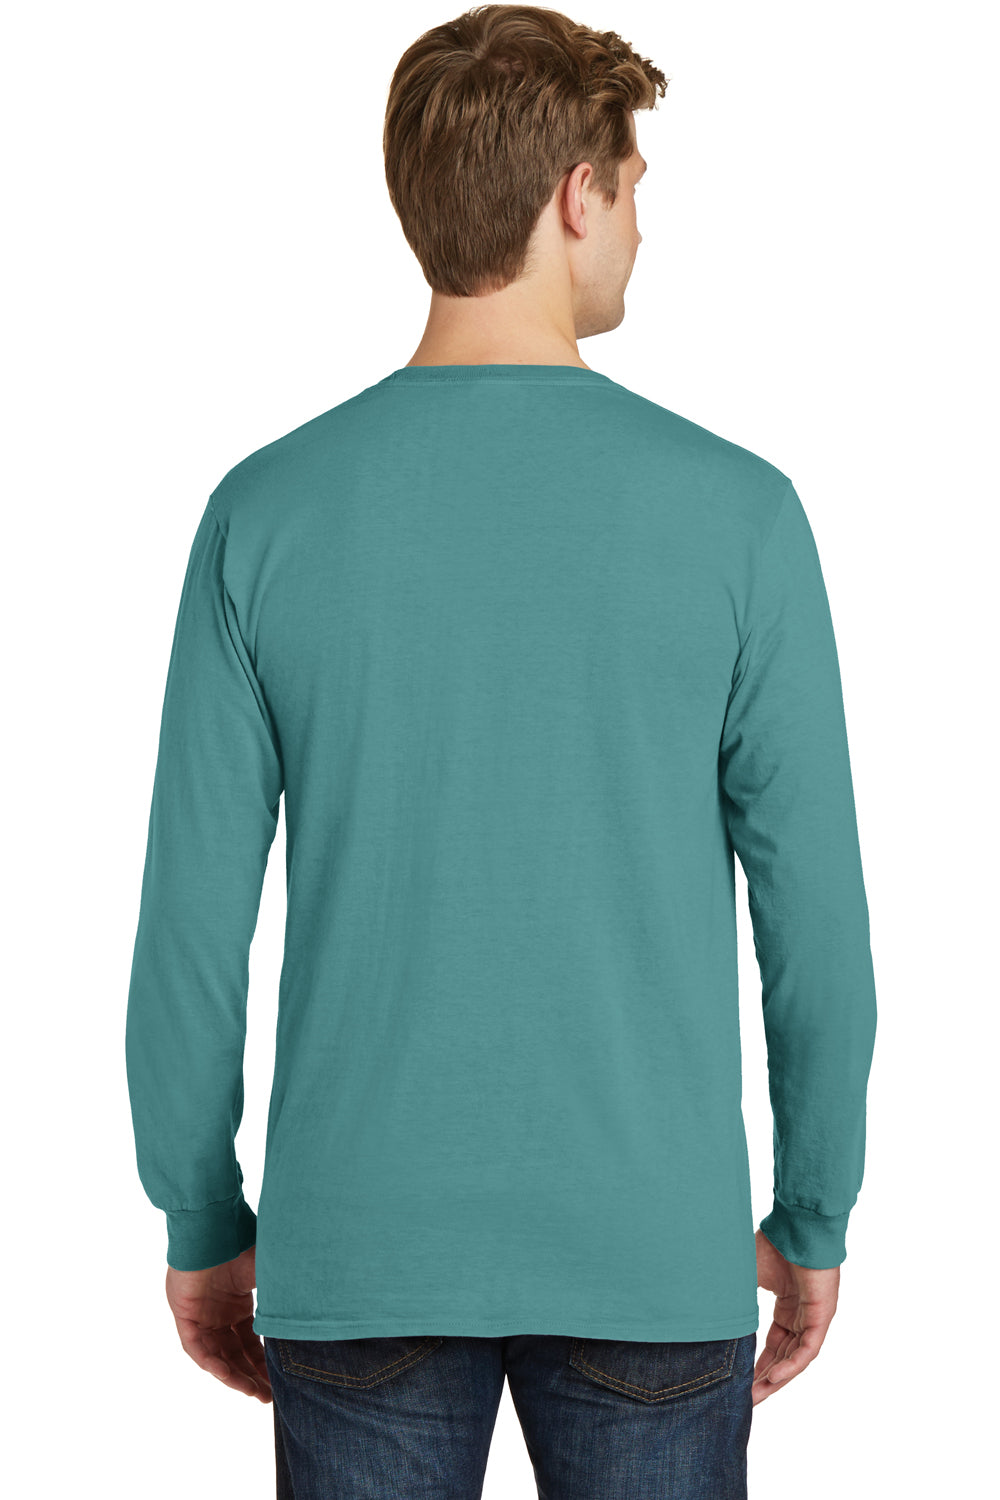 Port & Company PC099LSP Mens Beach Wash Long Sleeve Crewneck T-Shirt w/ Pocket Peacock Green Back